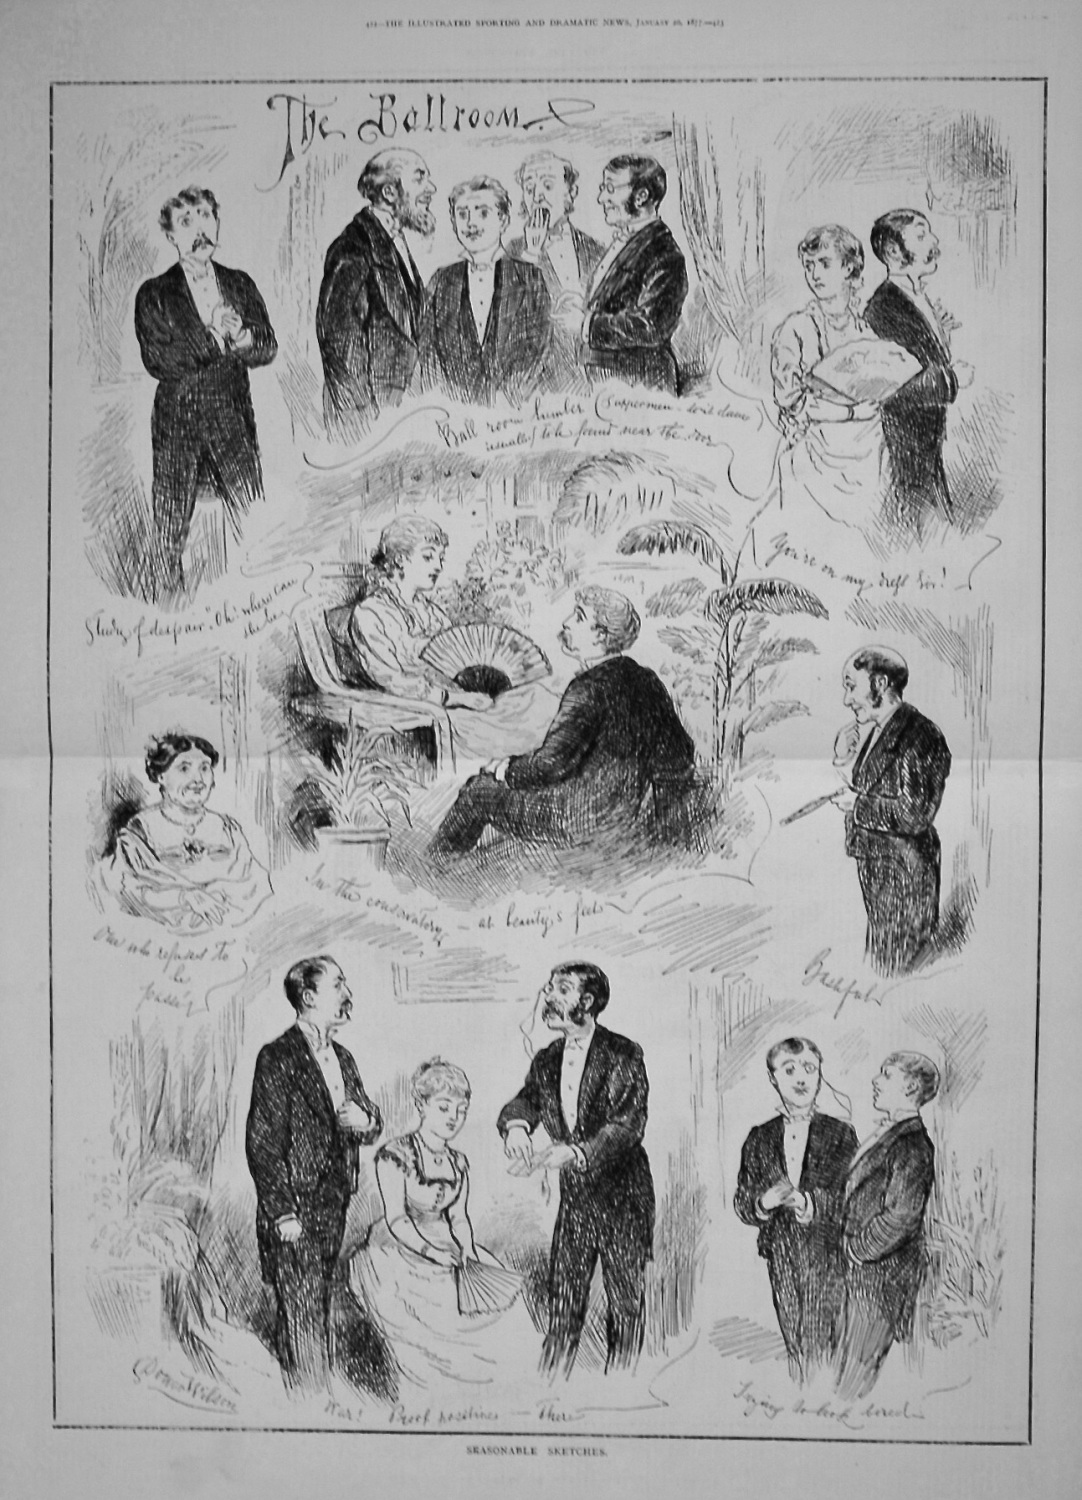 Seasonable Sketches.- The Ballroom. 1877